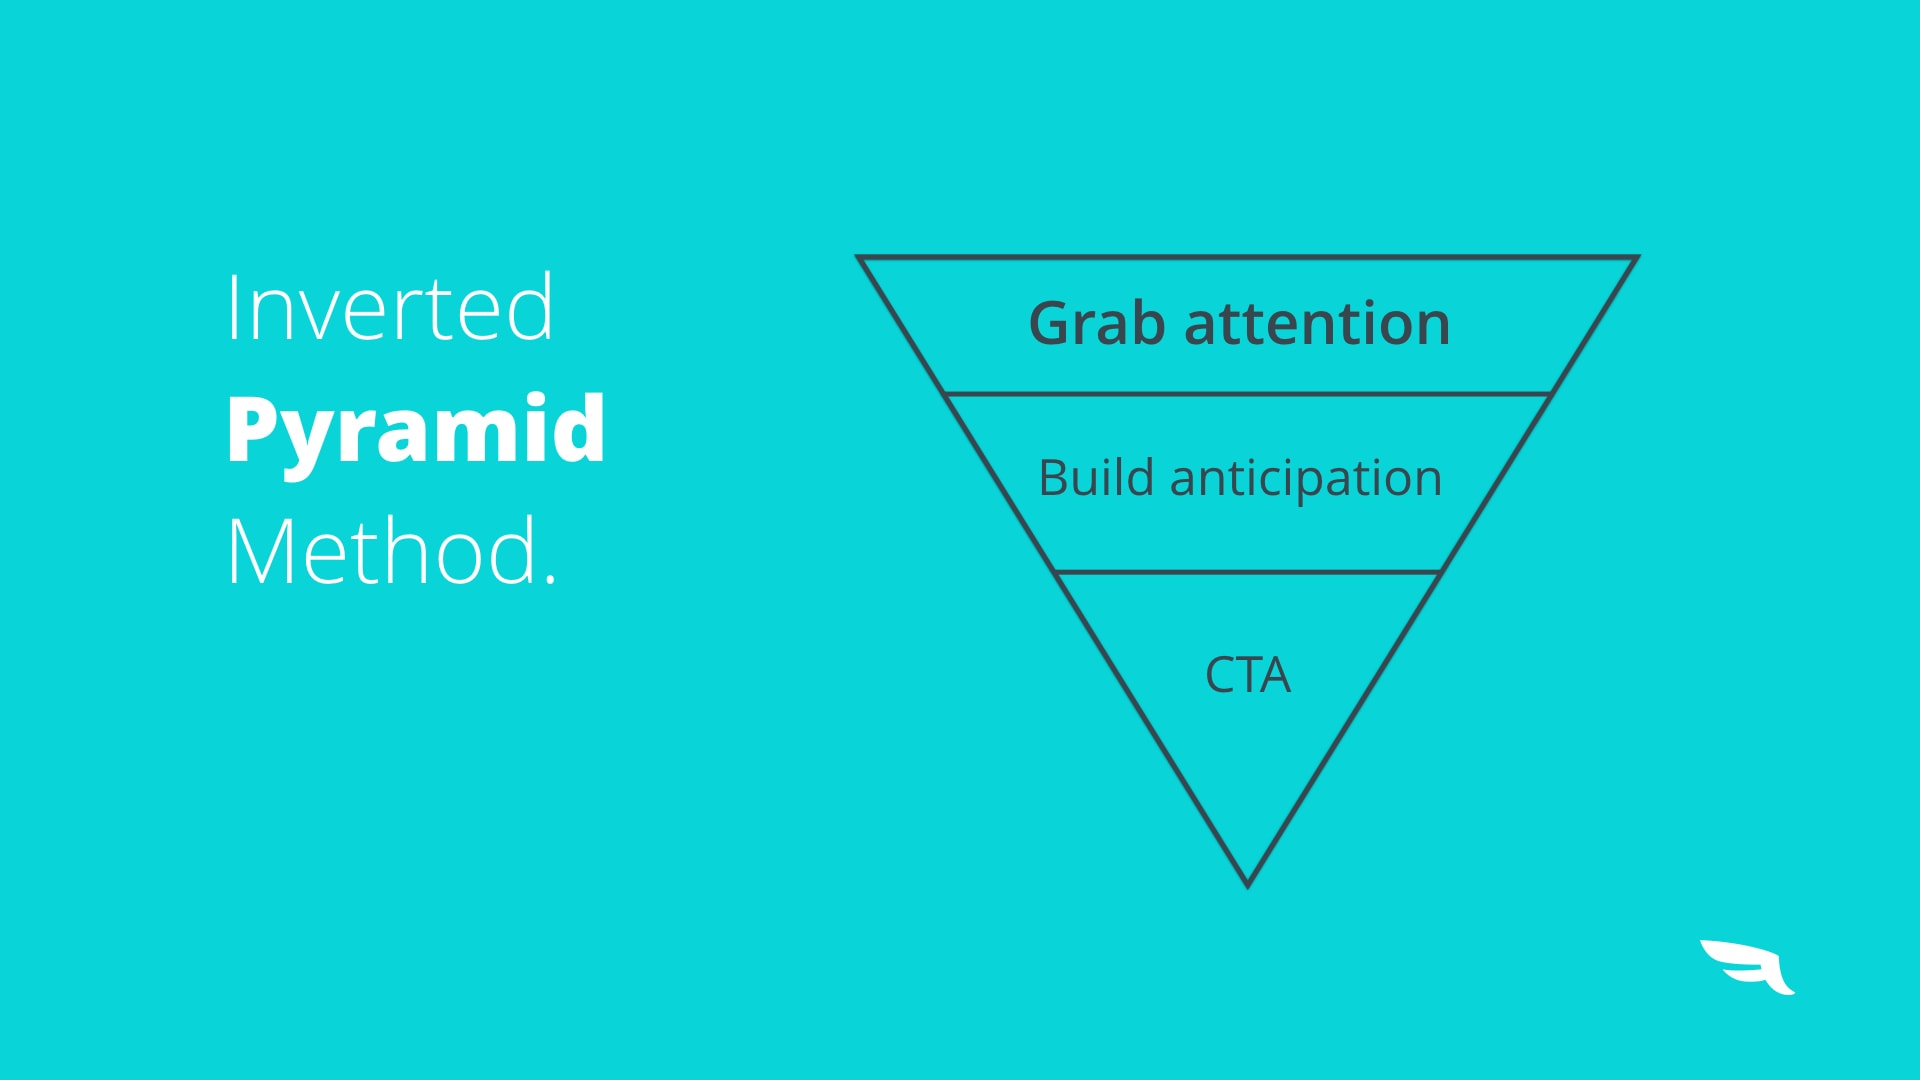 Attention build. Inverted Pyramid. Piramit method. Method grab. Inverted Pyramid (journalism).